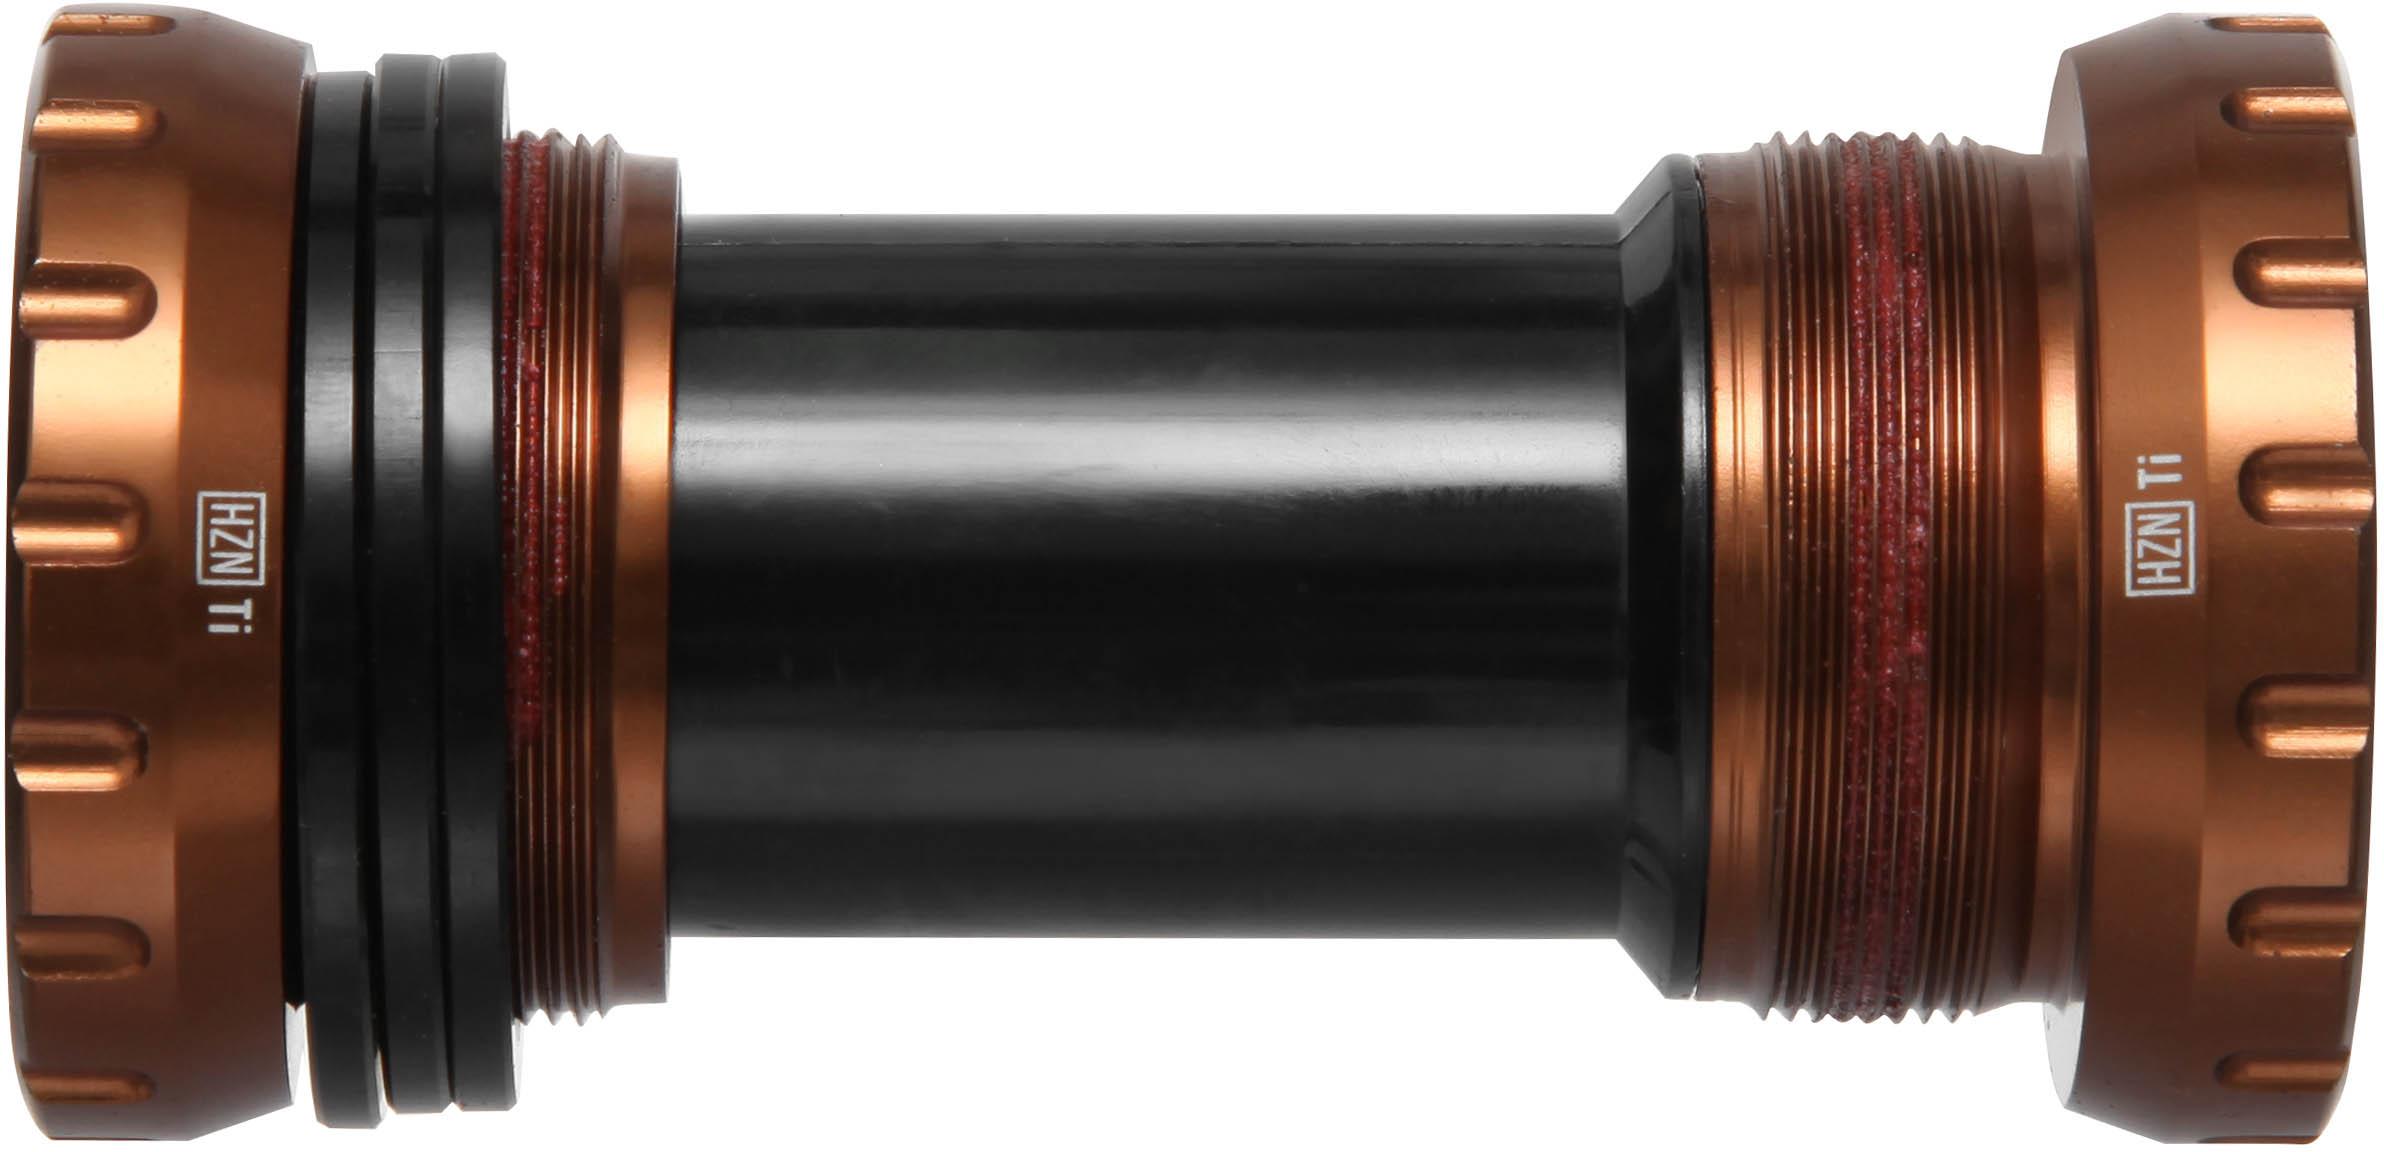 Nukeproof Horizon Shimano Bottom Bracket (24mm)  Copper